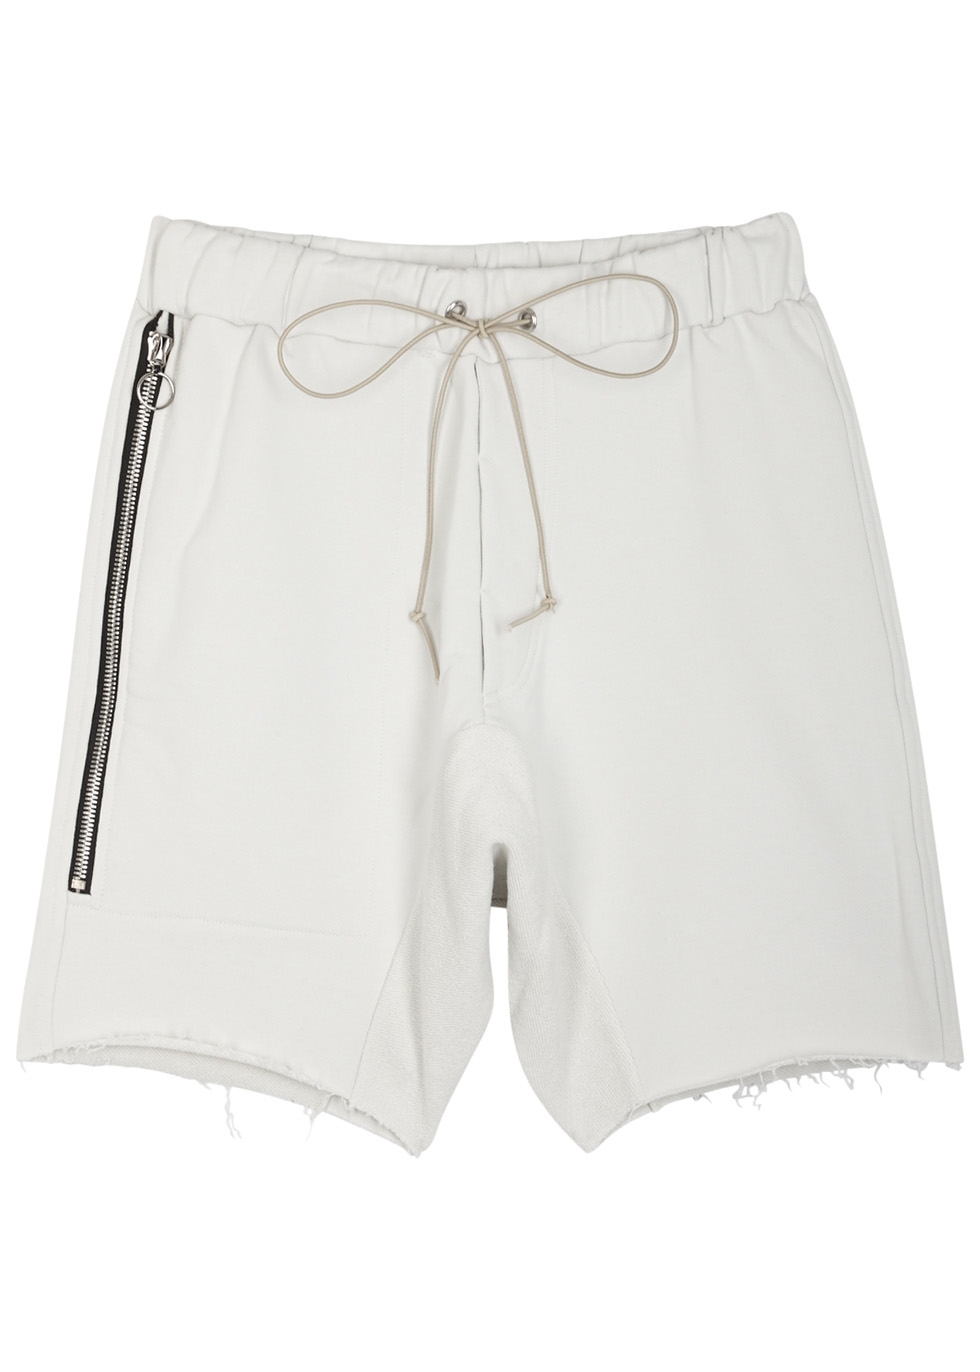 Off white cotton shorts